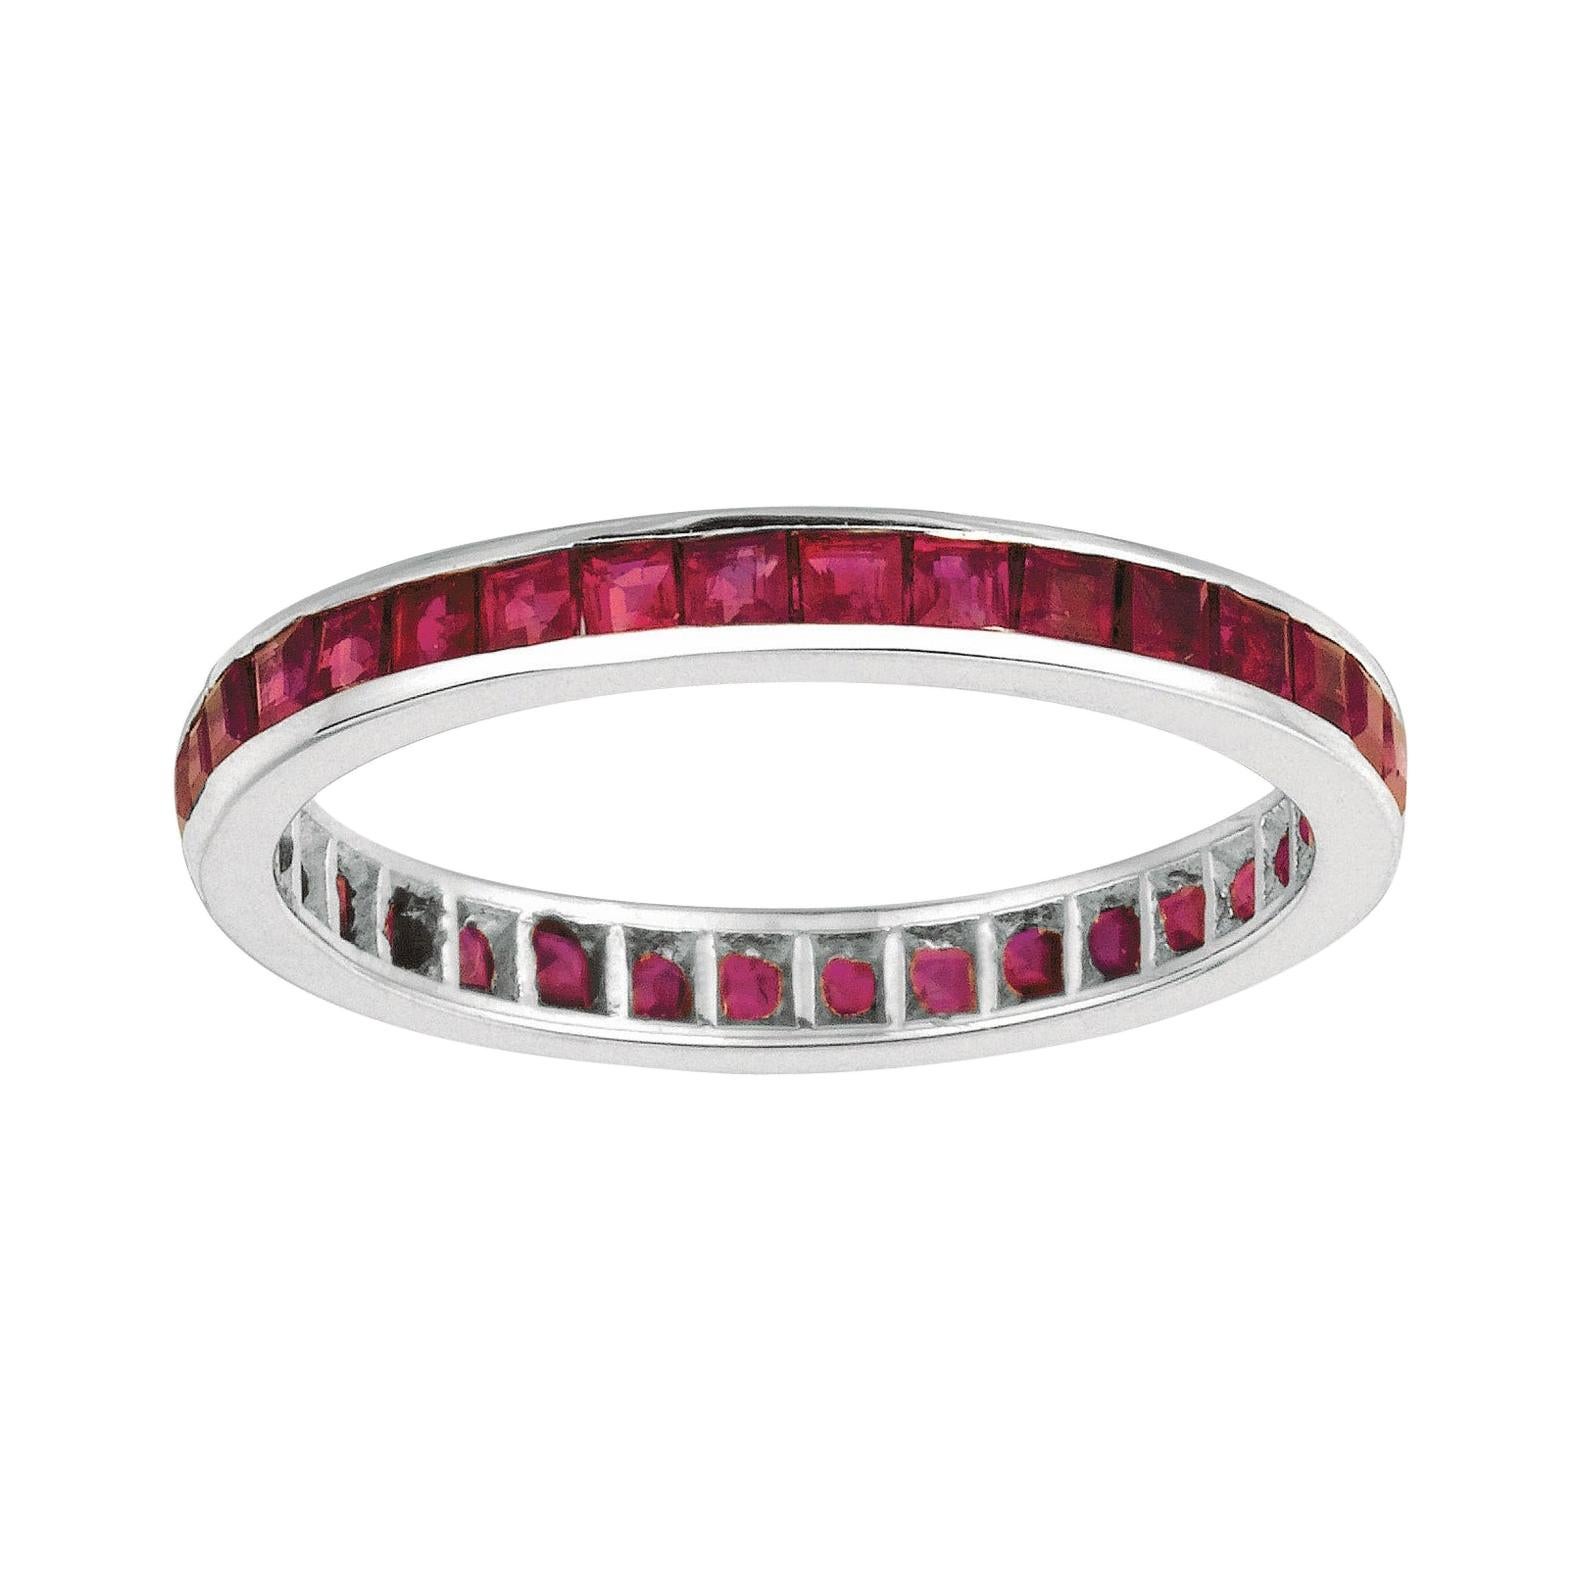 For Sale:  1.20 Carat Princess Cut Natural Ruby Ring Band 14 Karat White Gold